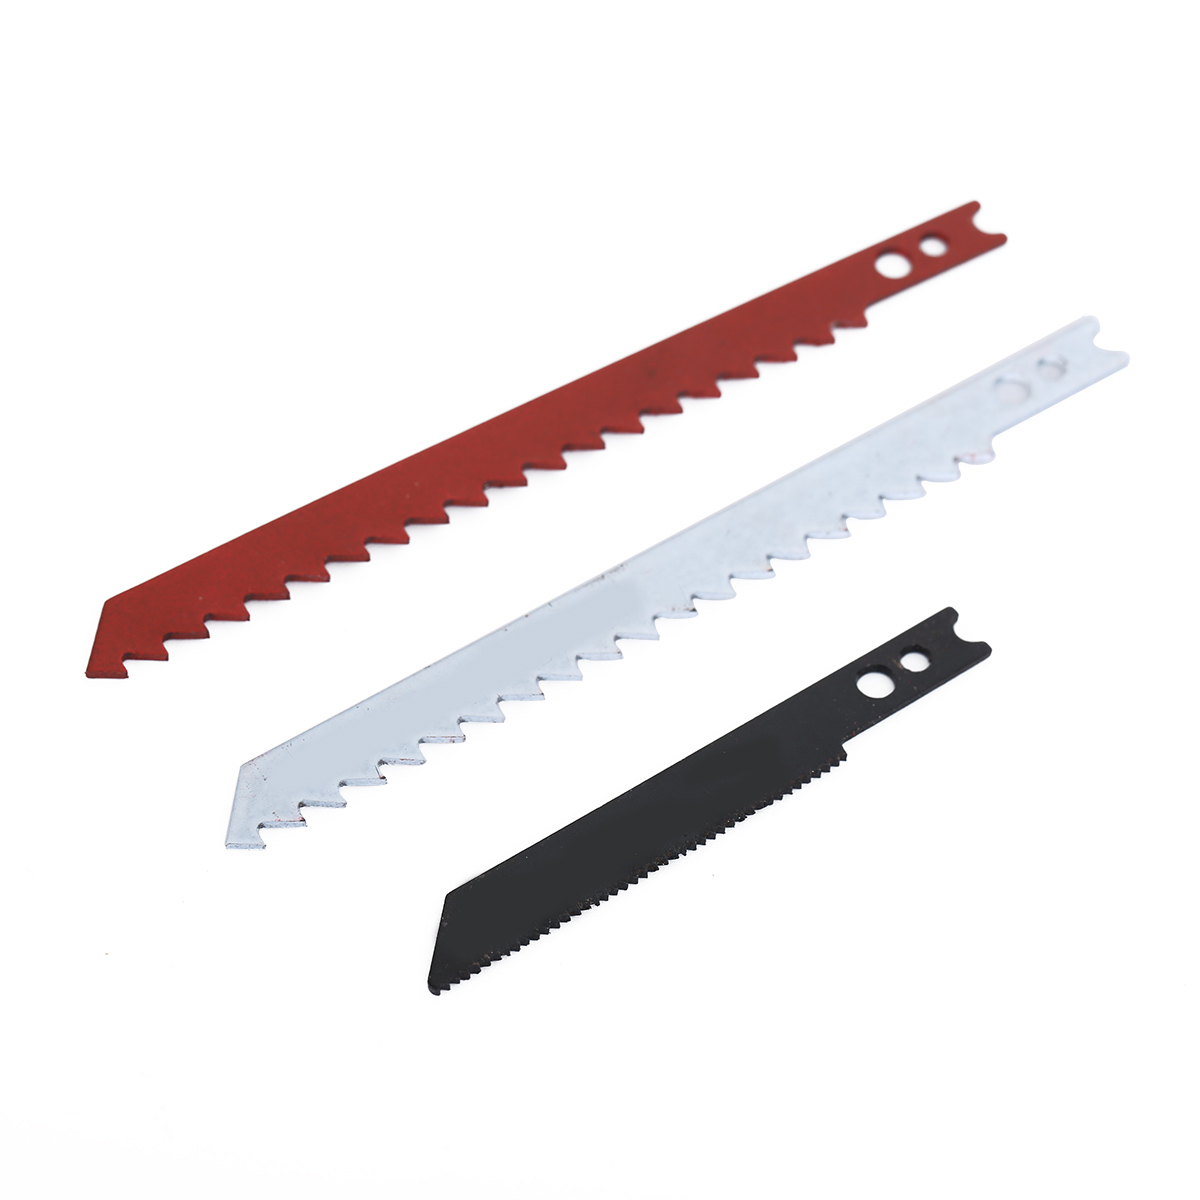 10pcs U-shank Jig Saw Blades Set for Black and Decker Jigsaw Metal Plastic Wood Blades